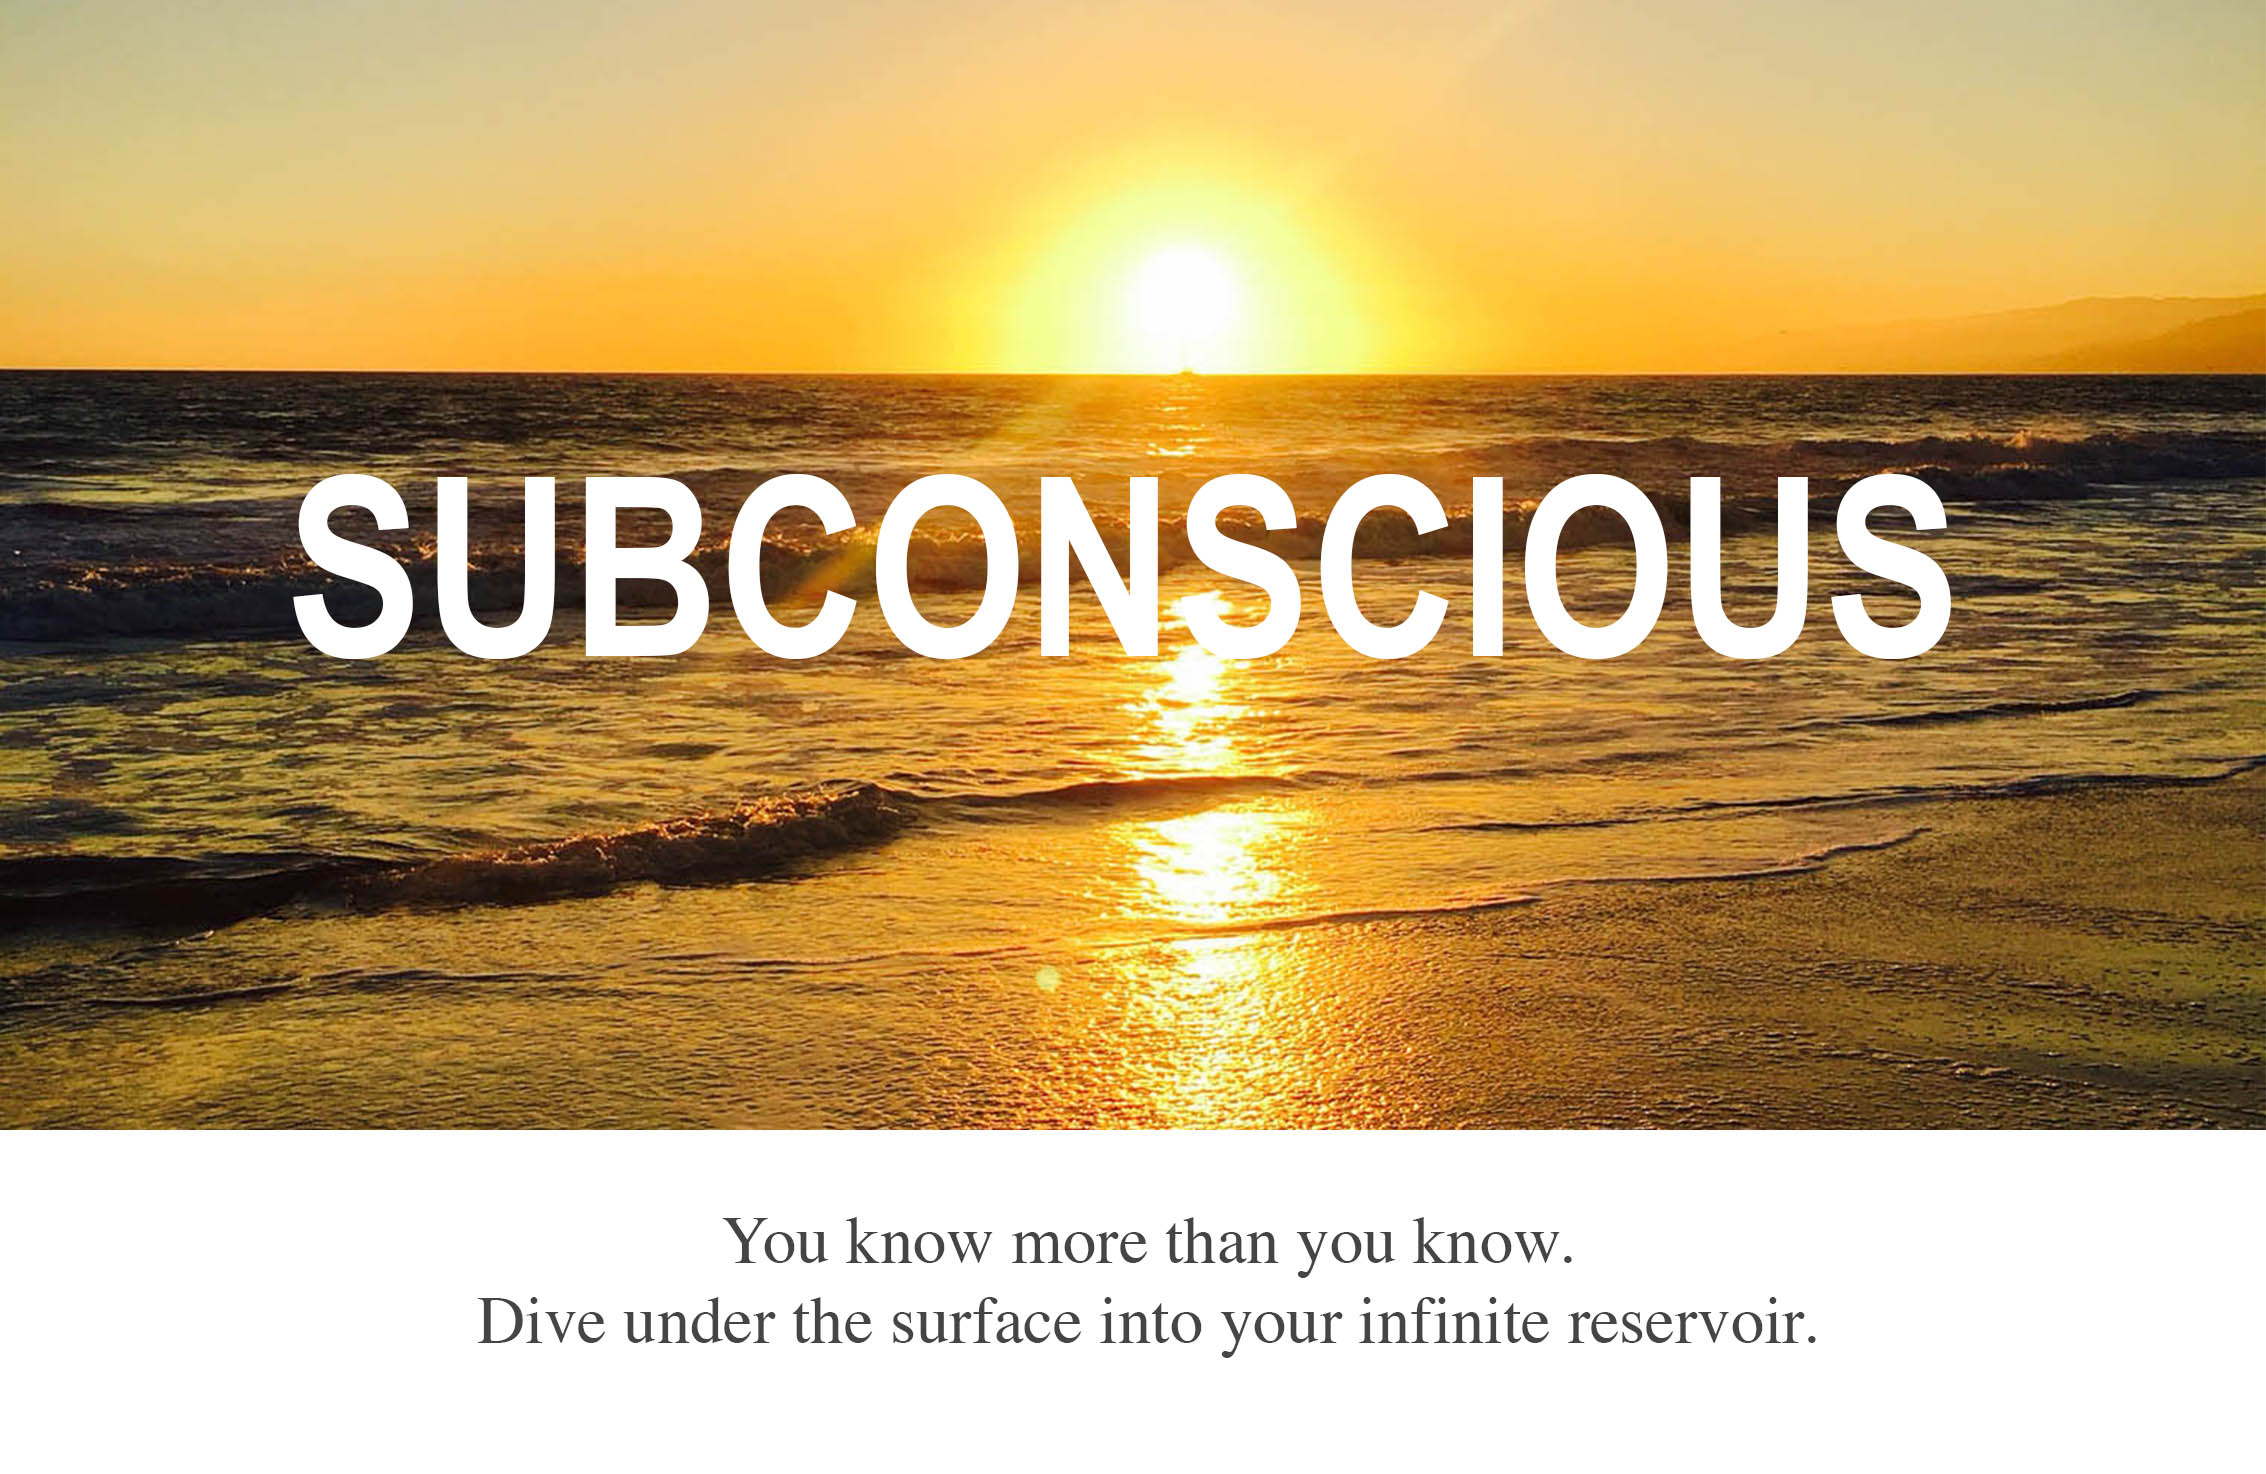 subconscious_crop.jpg